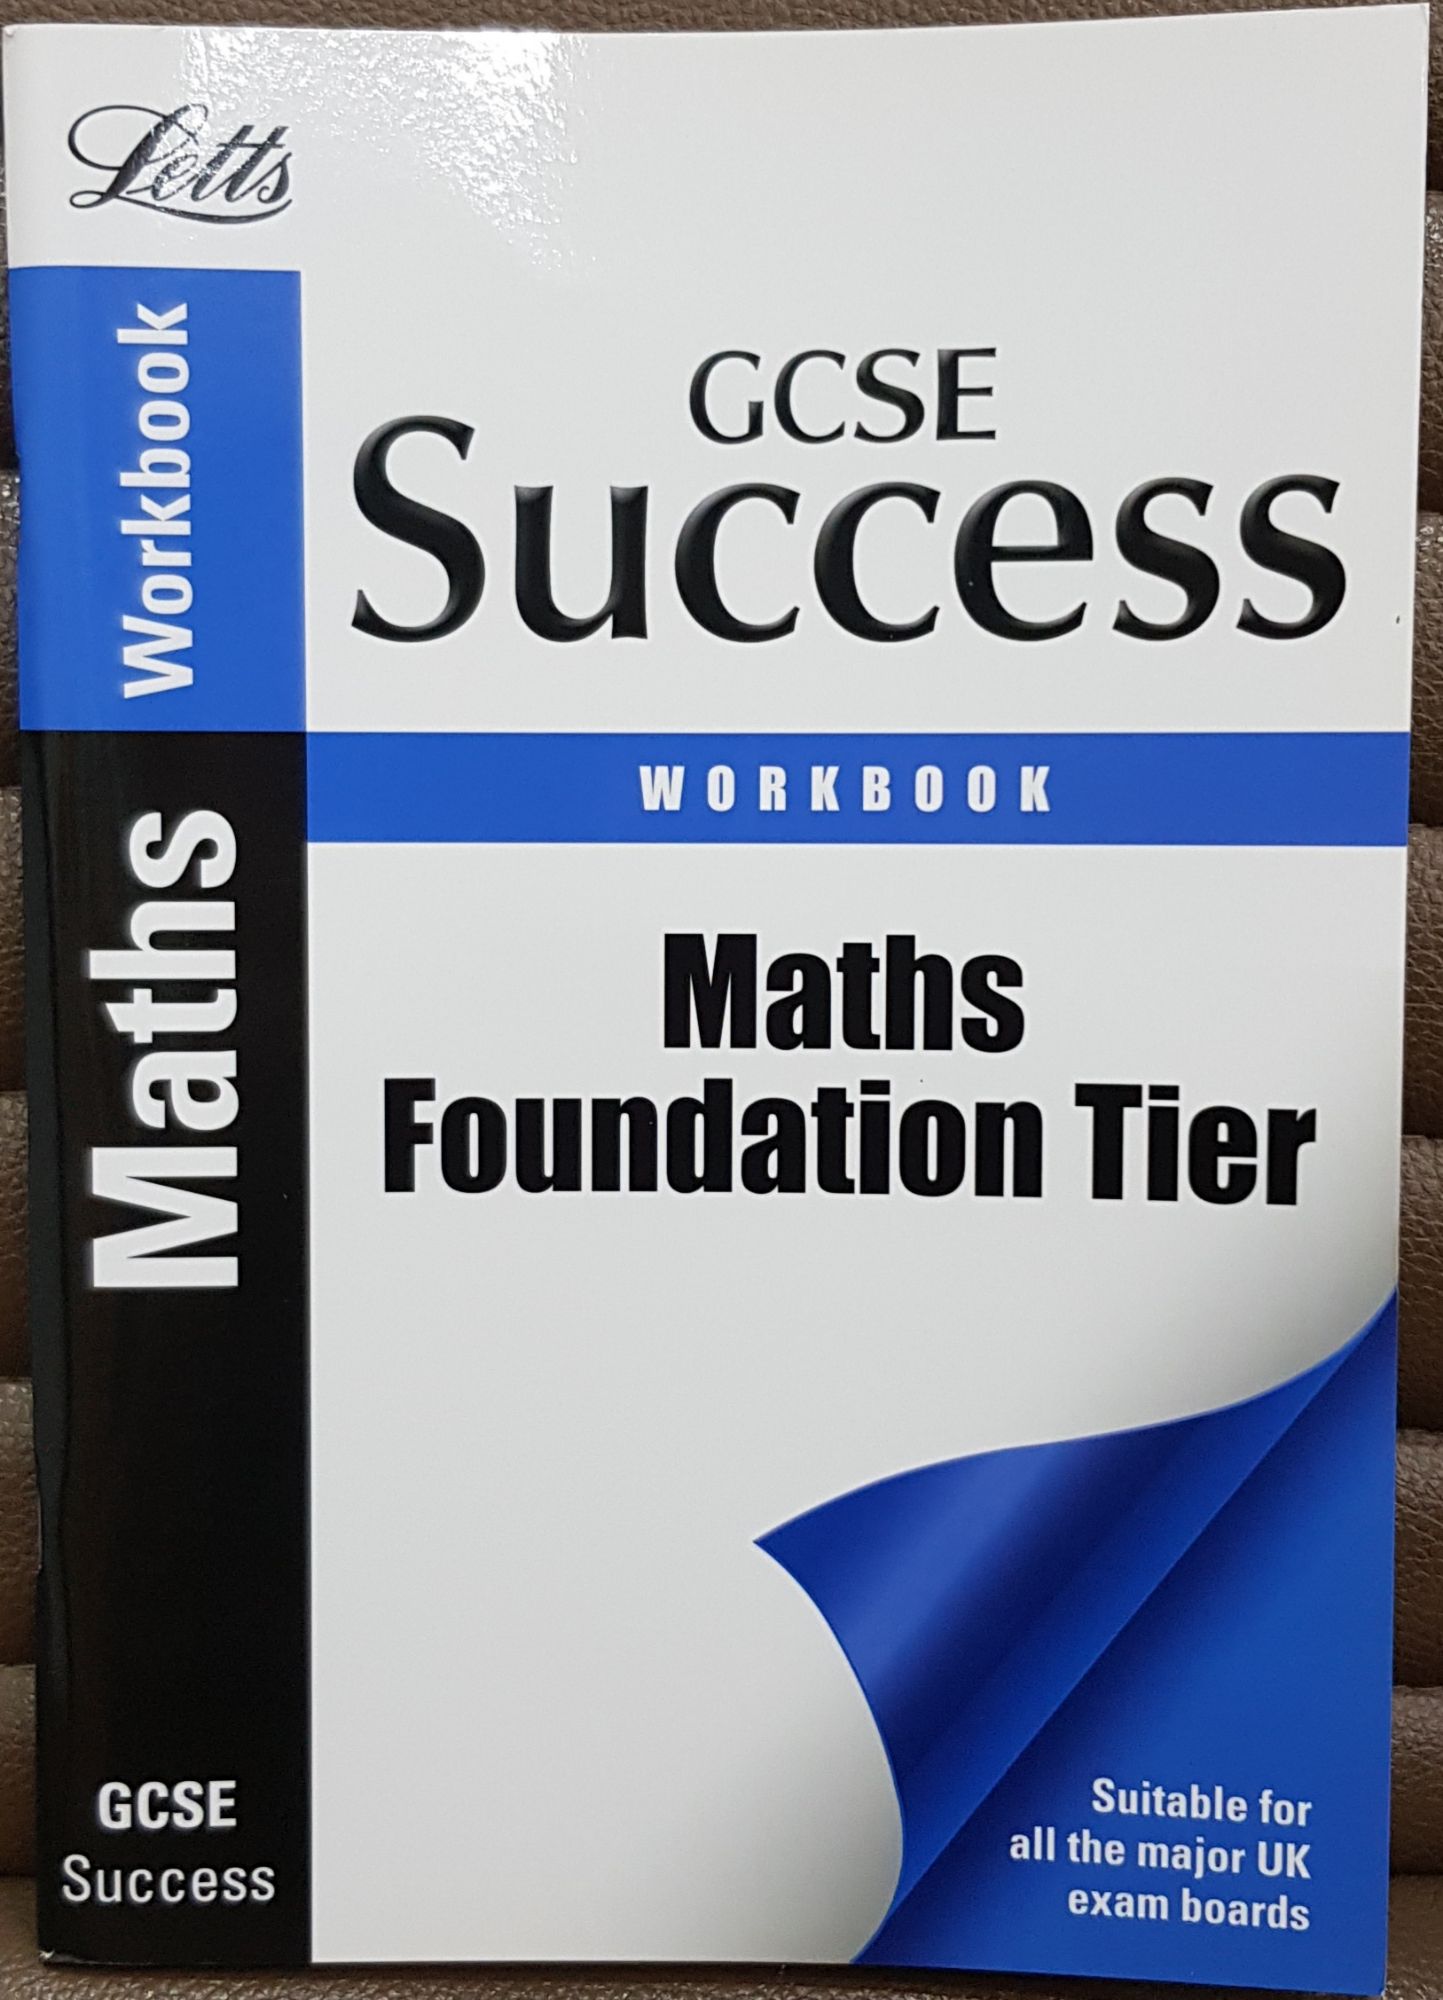 GCSE Success Workbook Maths Foundation Tier